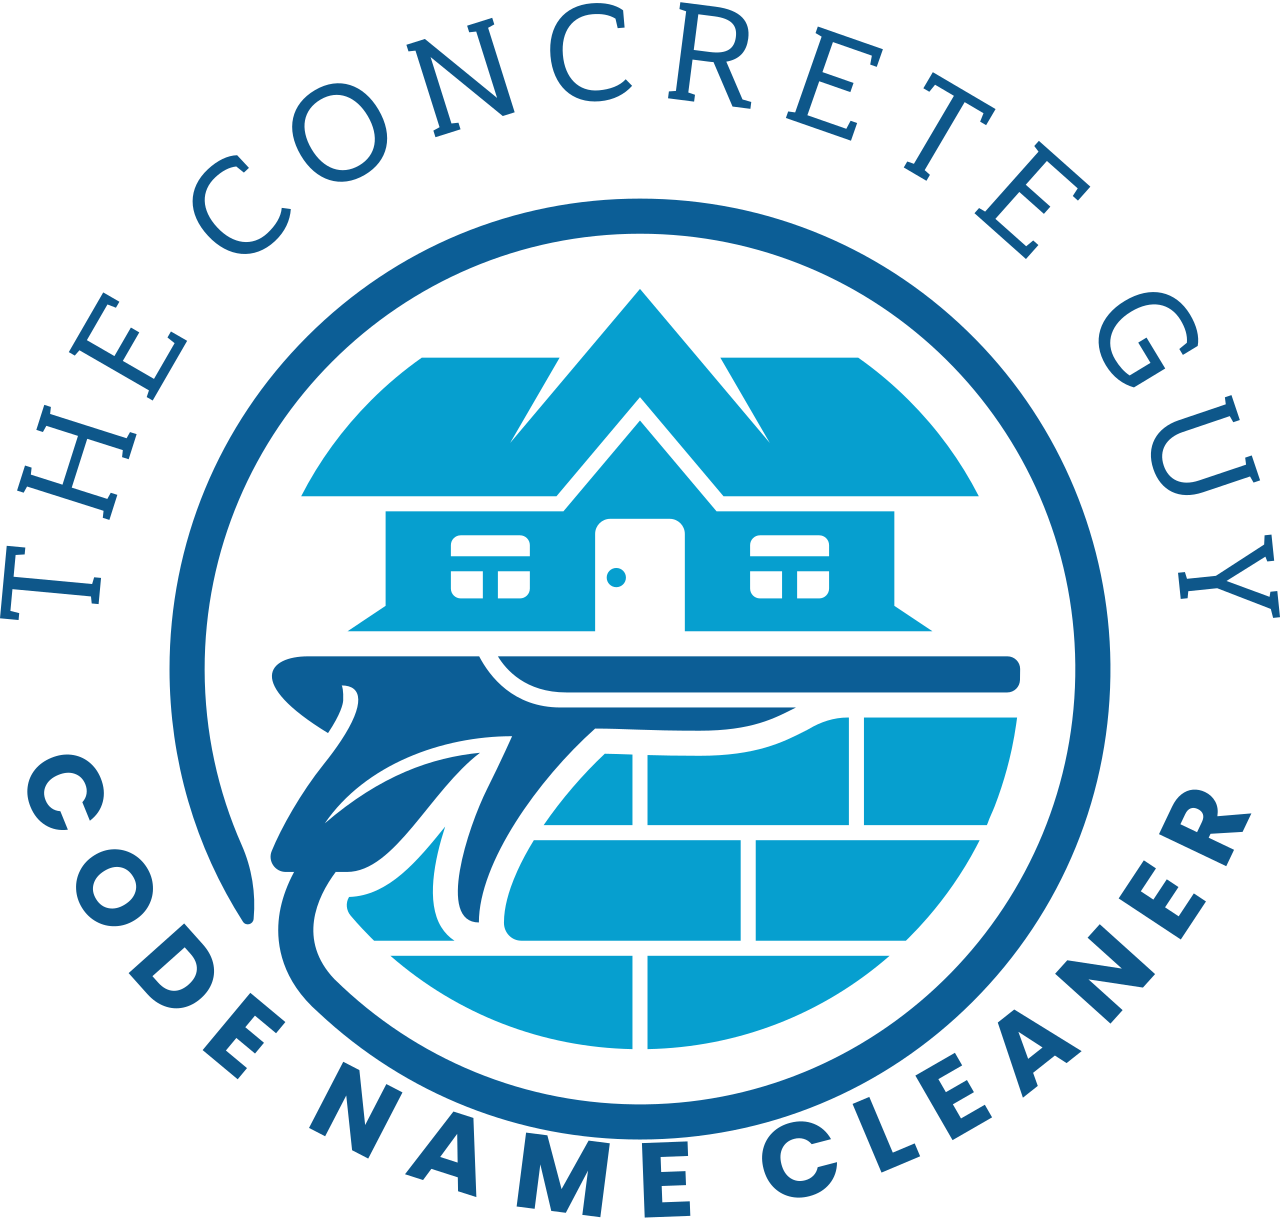 THE CONCRETE GUY's logo